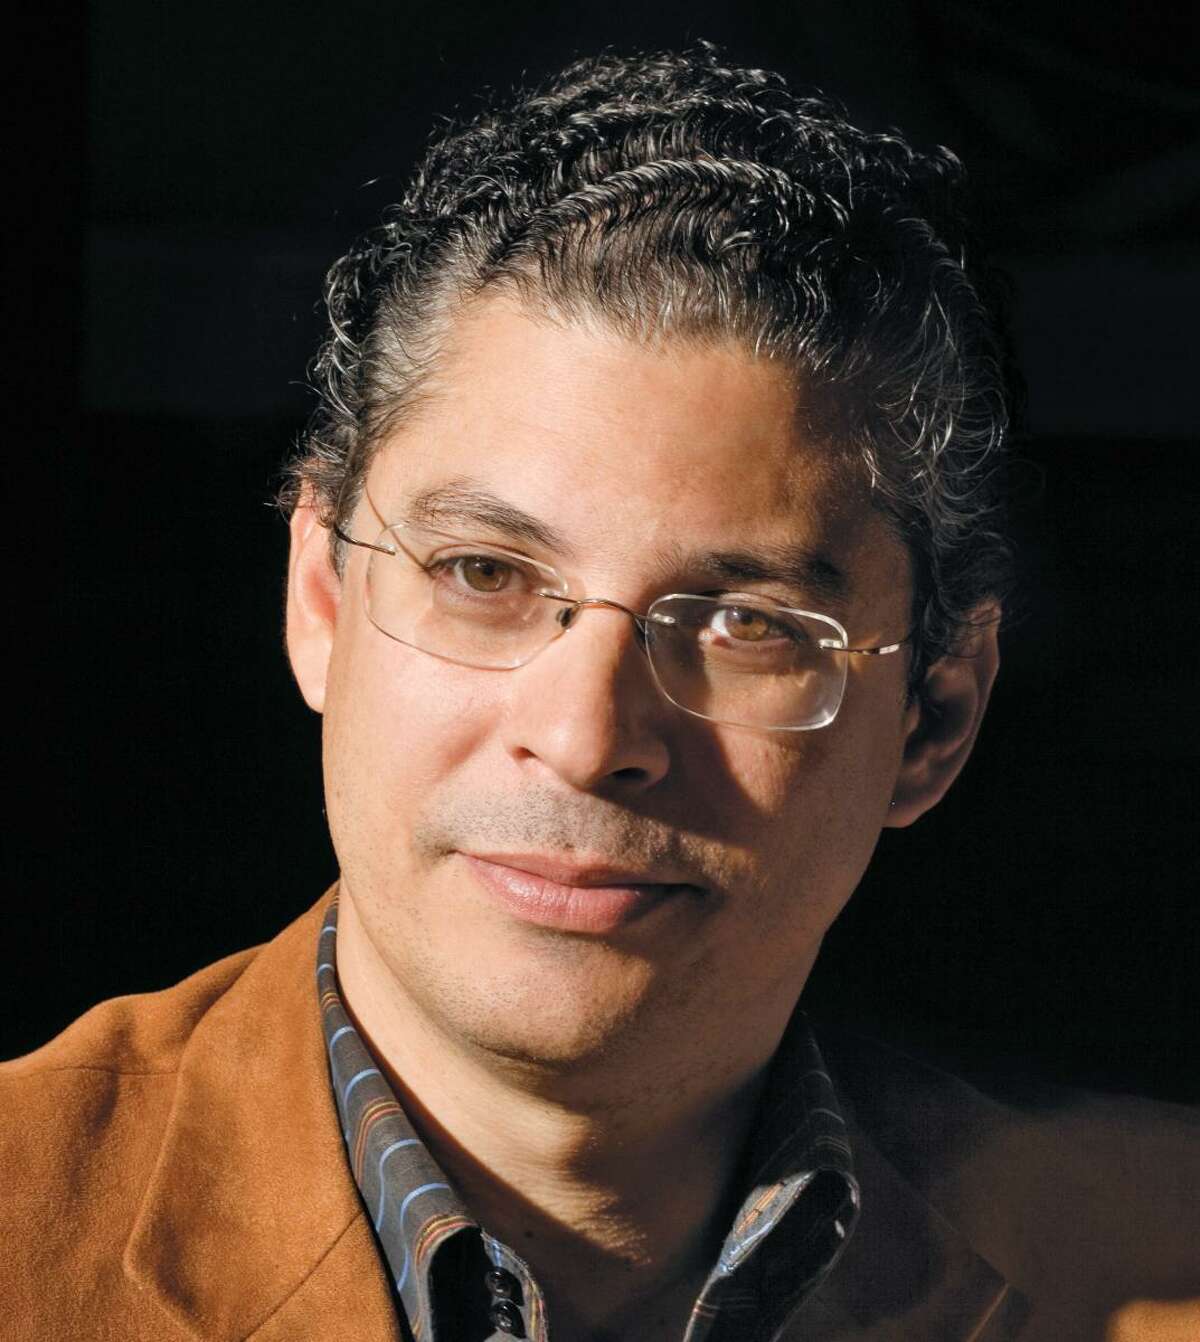 Pianist Leonel Morales